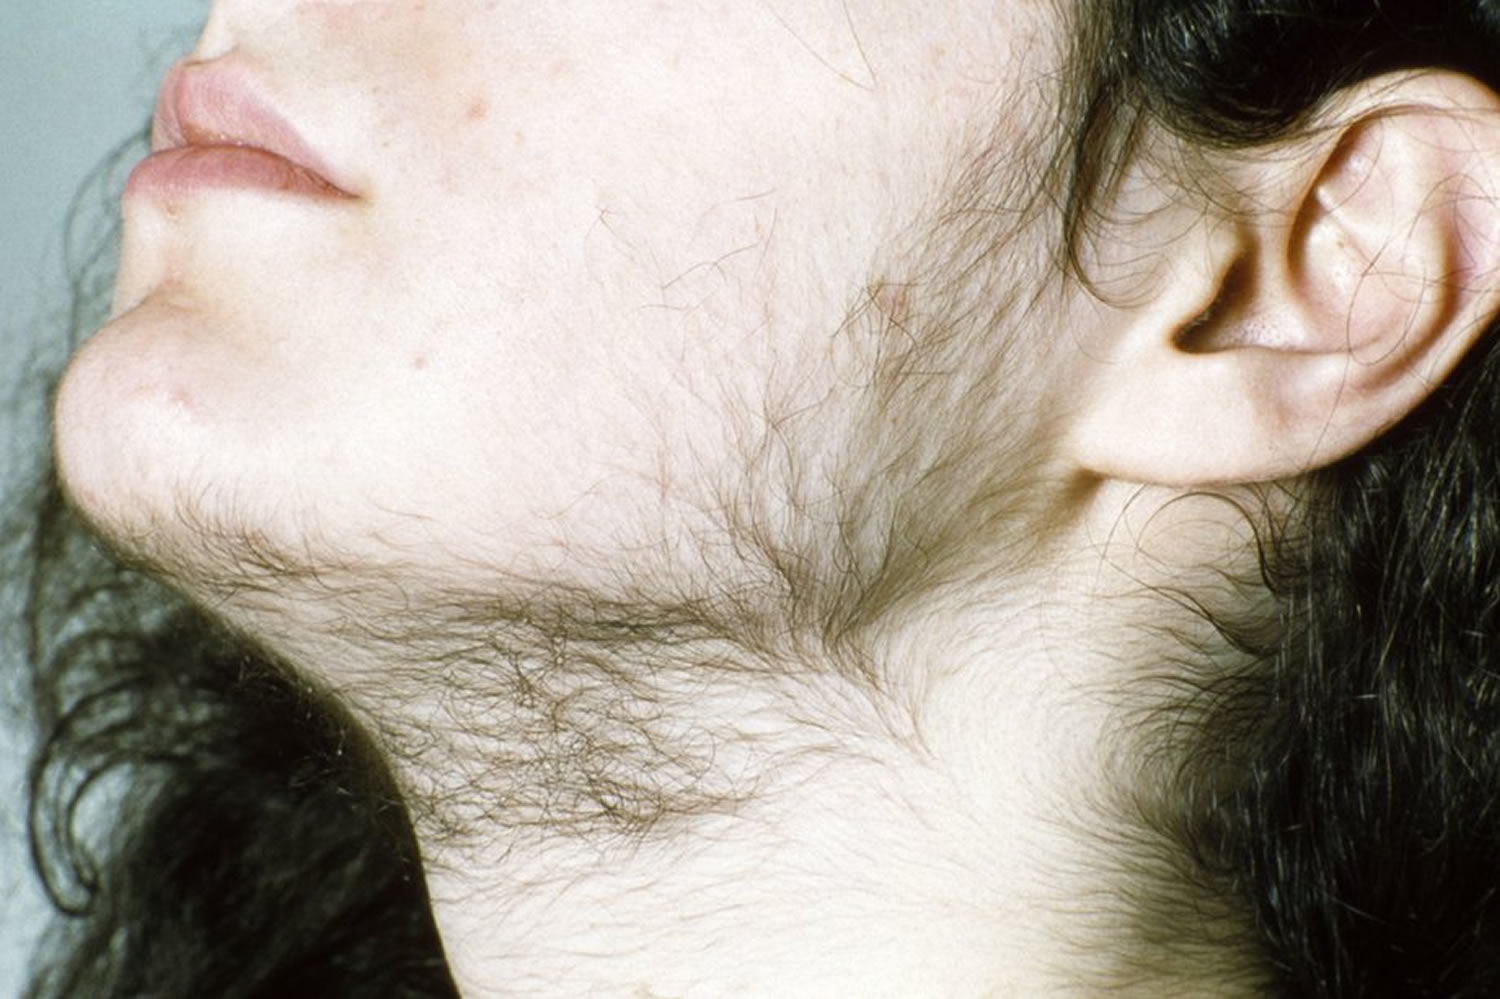 Facial hair on women steroids